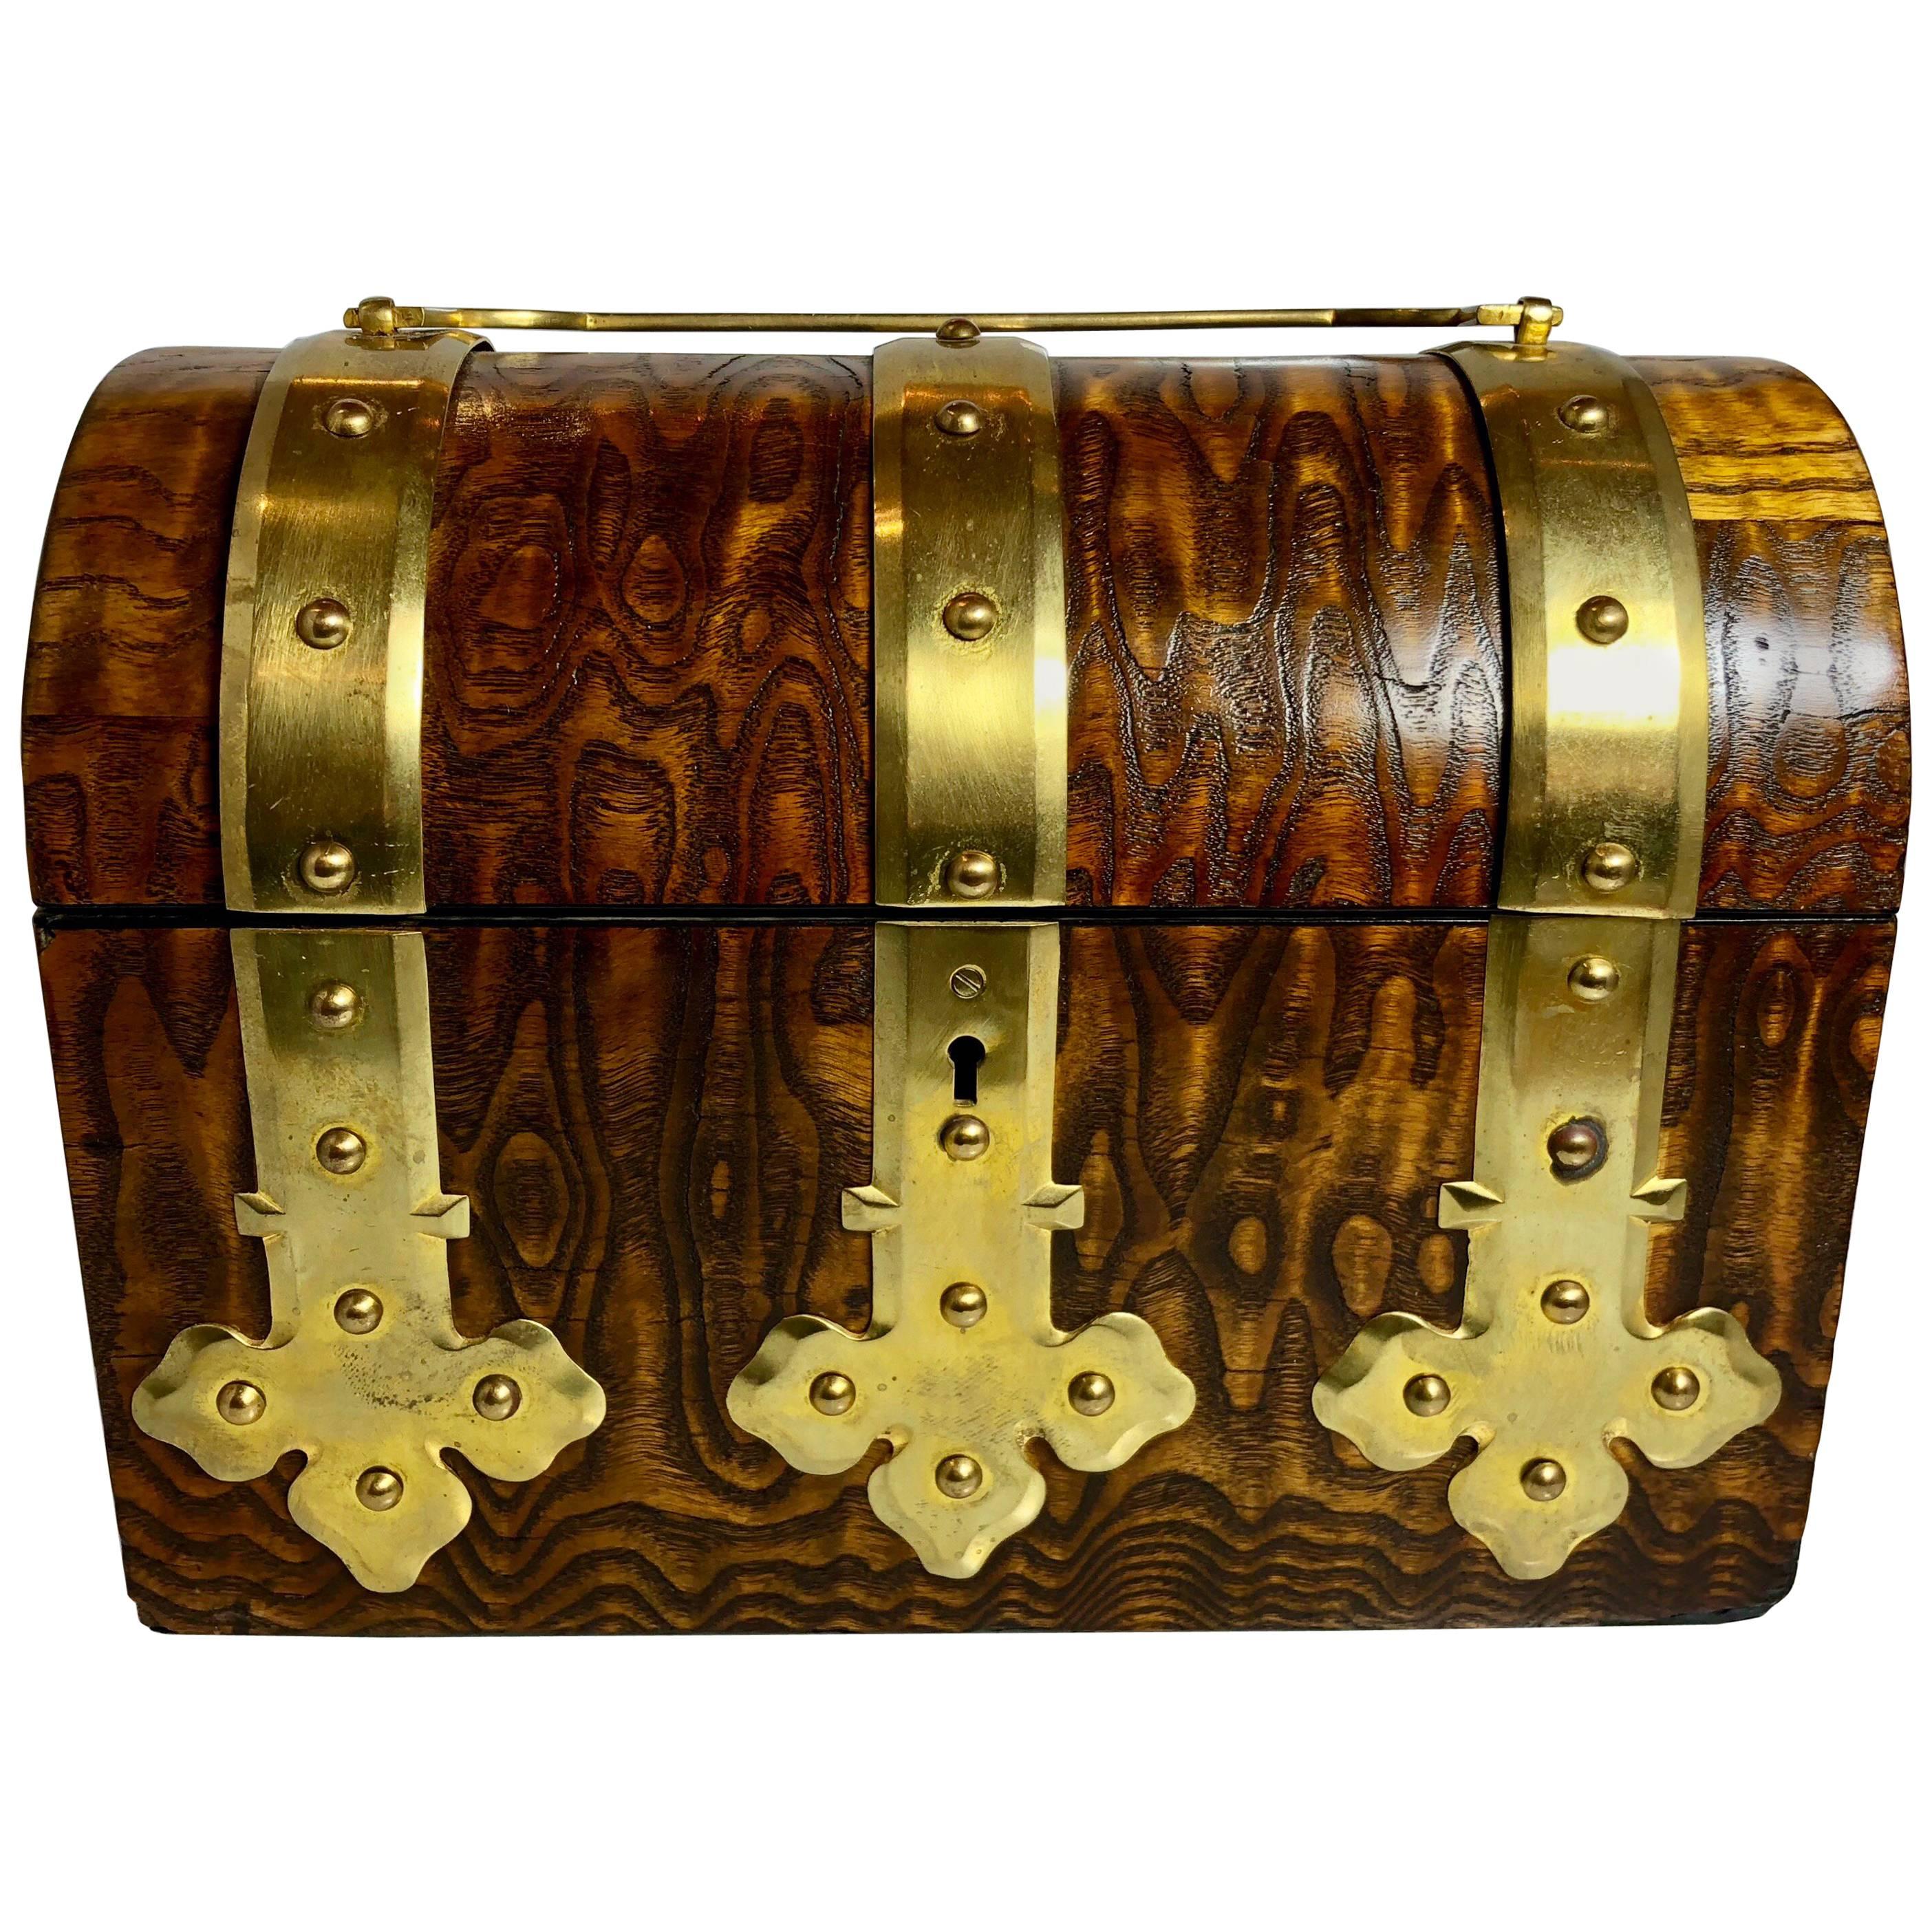 Antique English Brass and Burled Walnut Box, circa 1870-1880